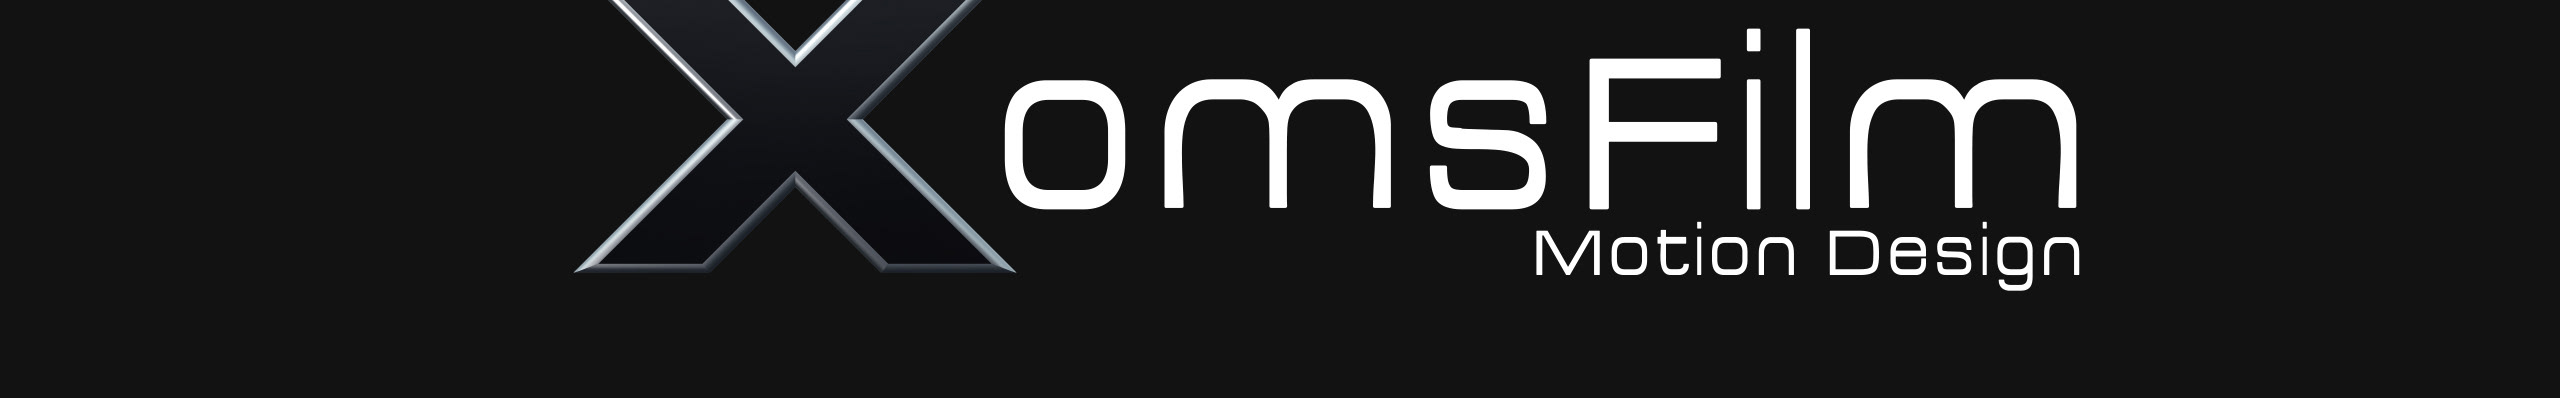 Banner profilu uživatele XomsFilm TV